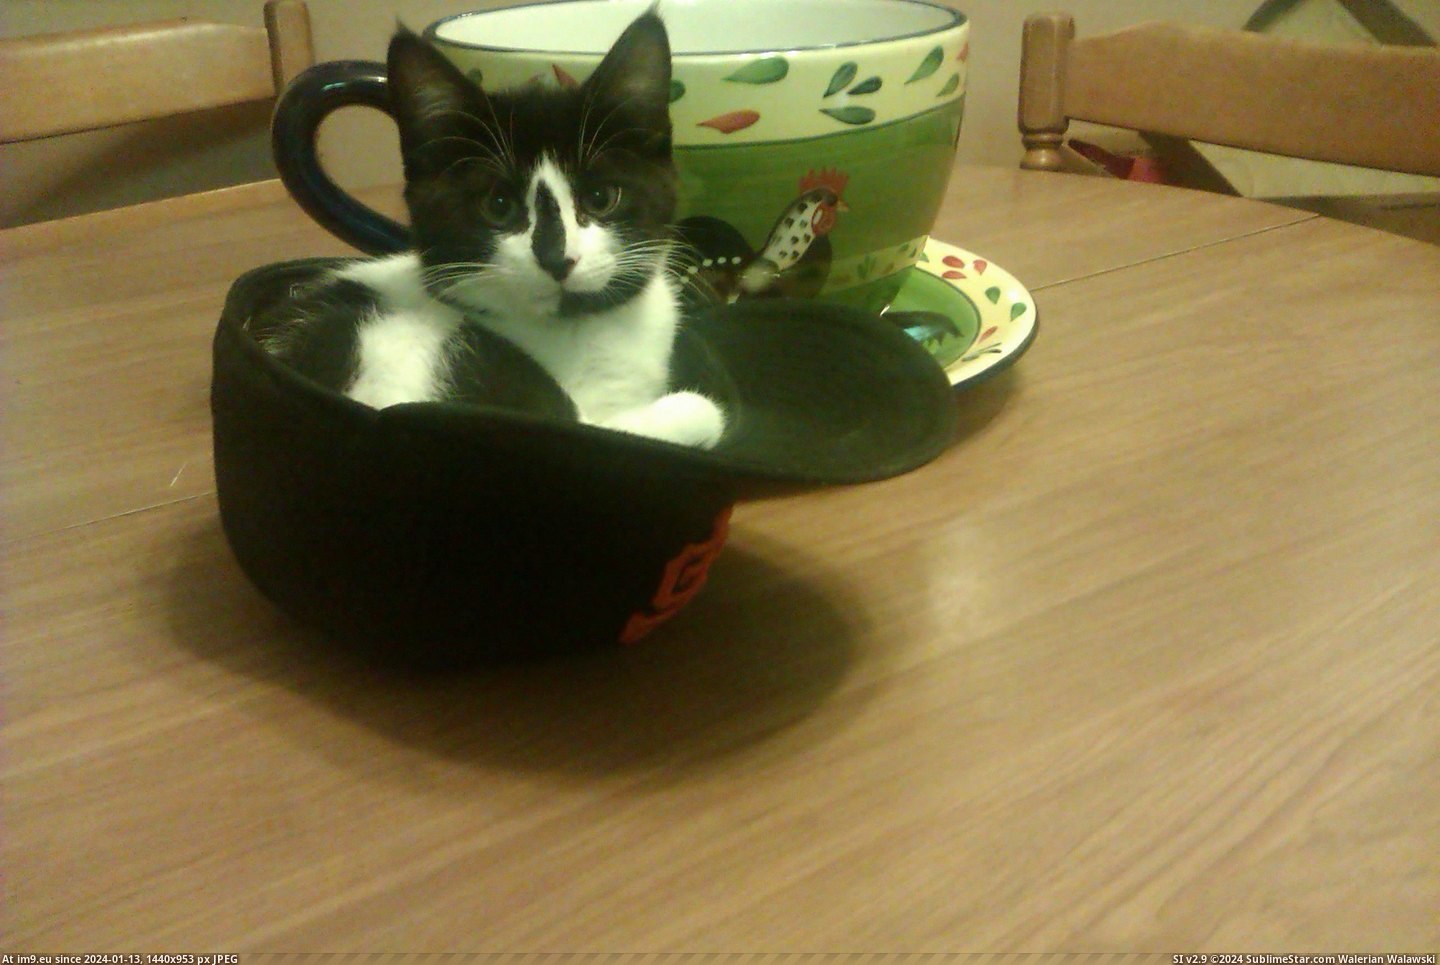 #Cats #Fits #Sits [Cats] If I fits, I sits! Pic. (Bild von album My r/CATS favs))